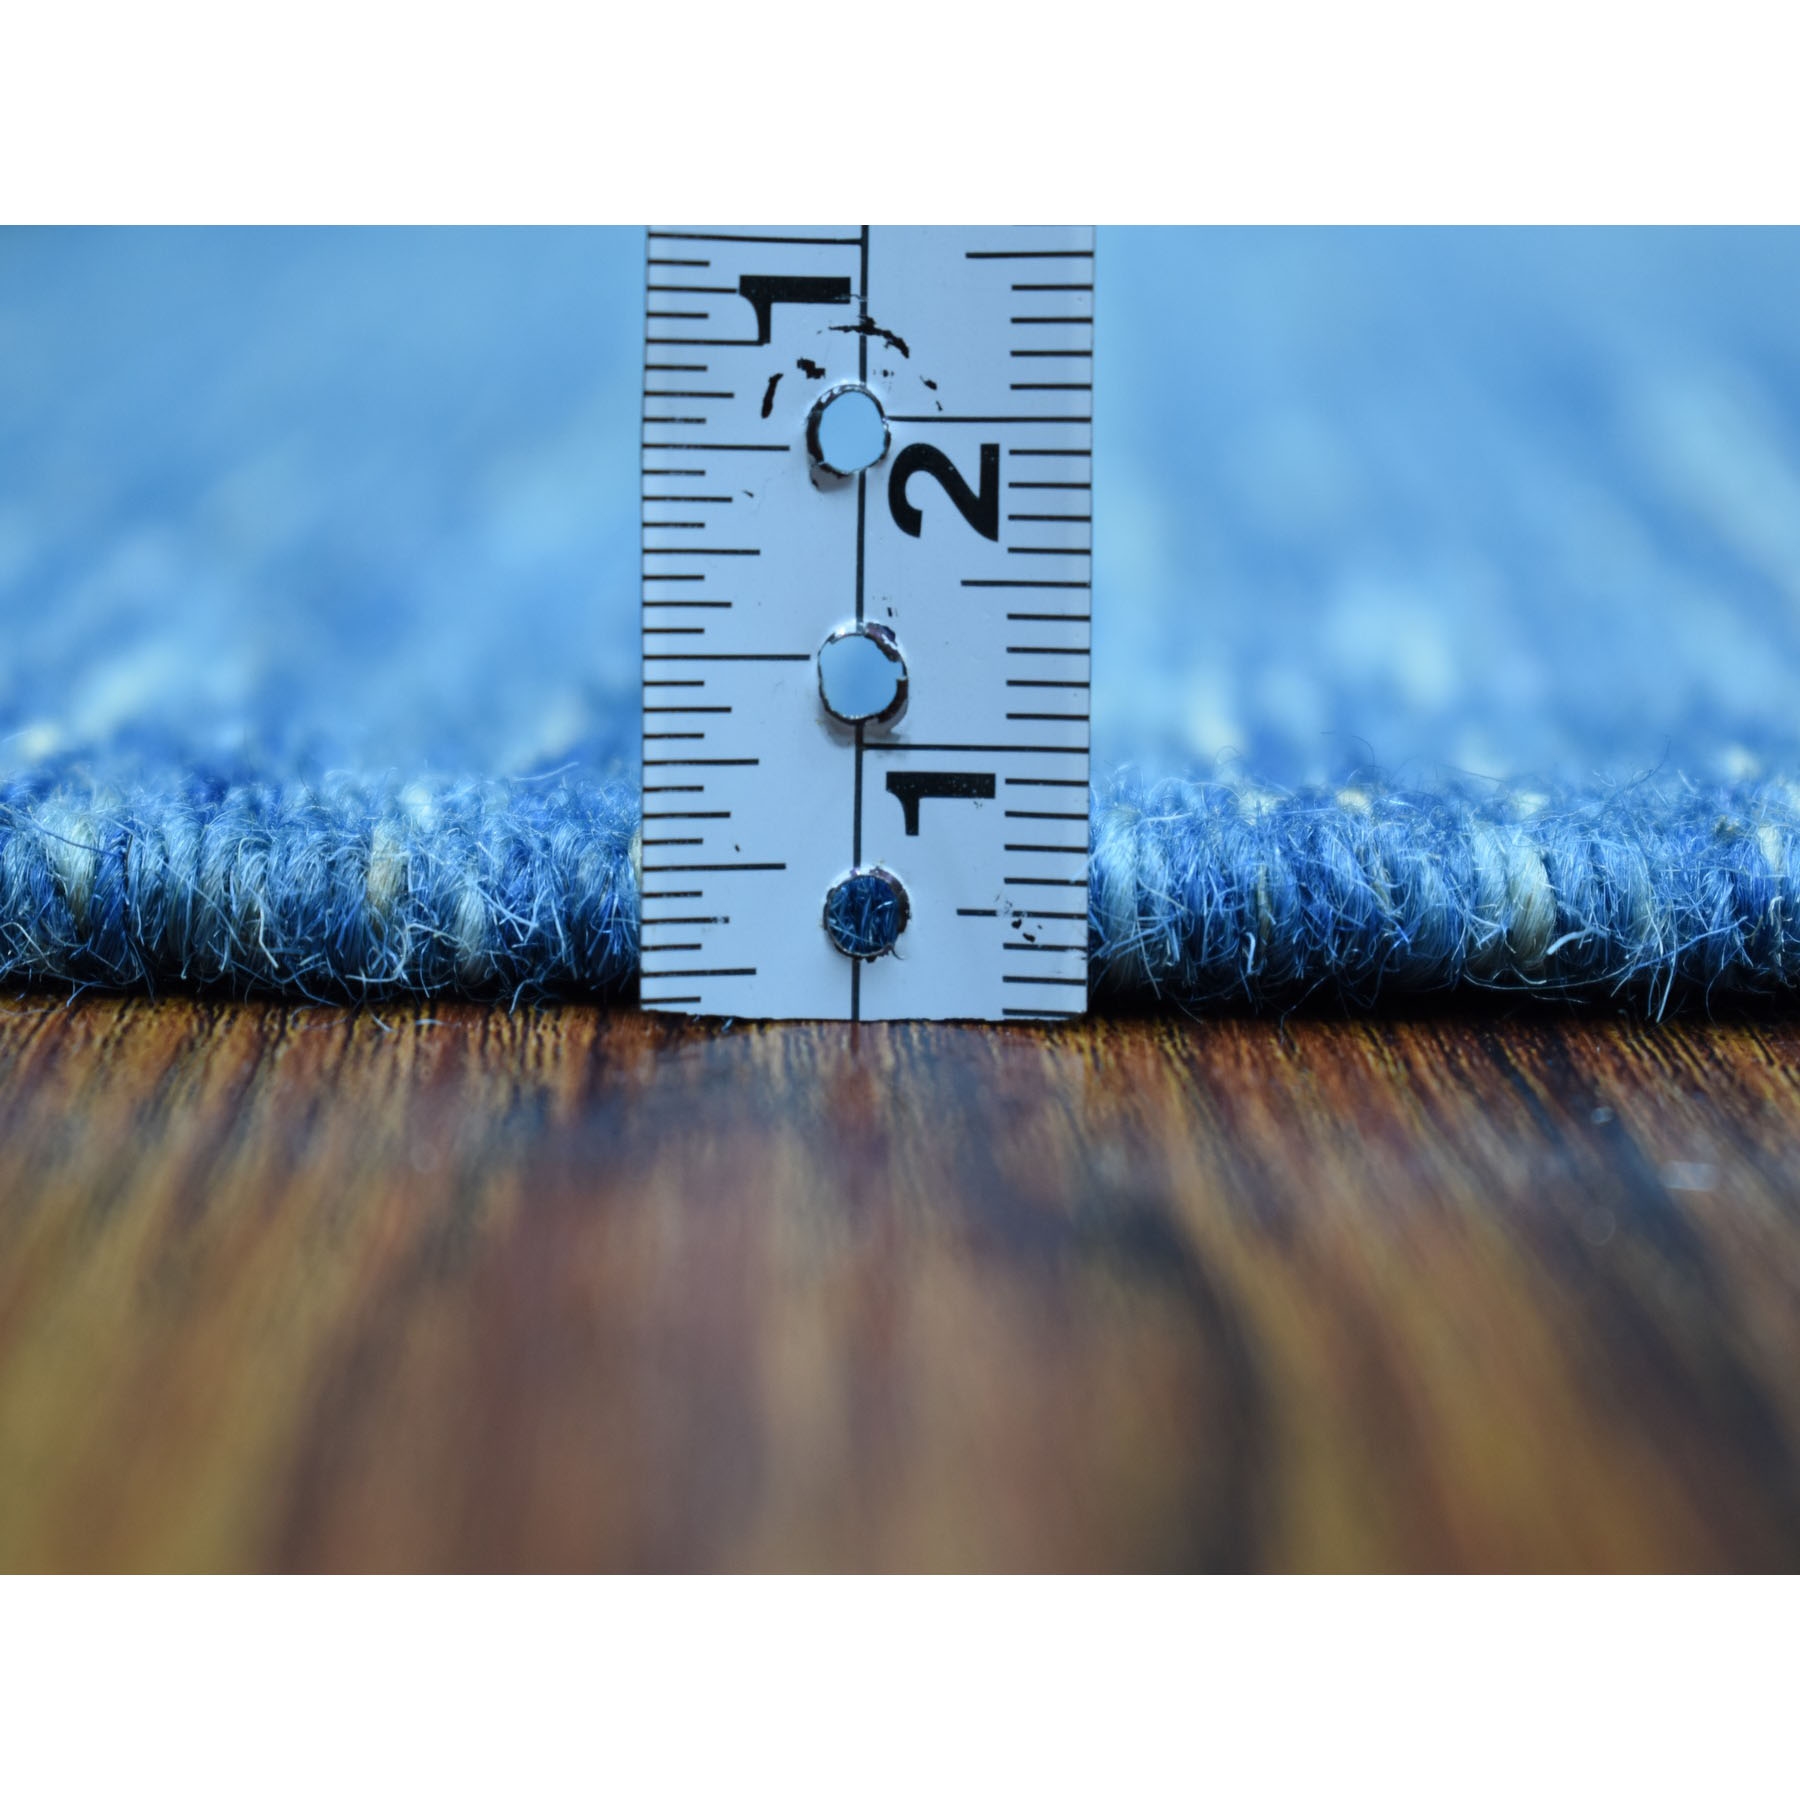 2-4 x6-3  Blue Shades Flat Weave Kilim Pure Wool Hand Woven Runner Oriental Rug 